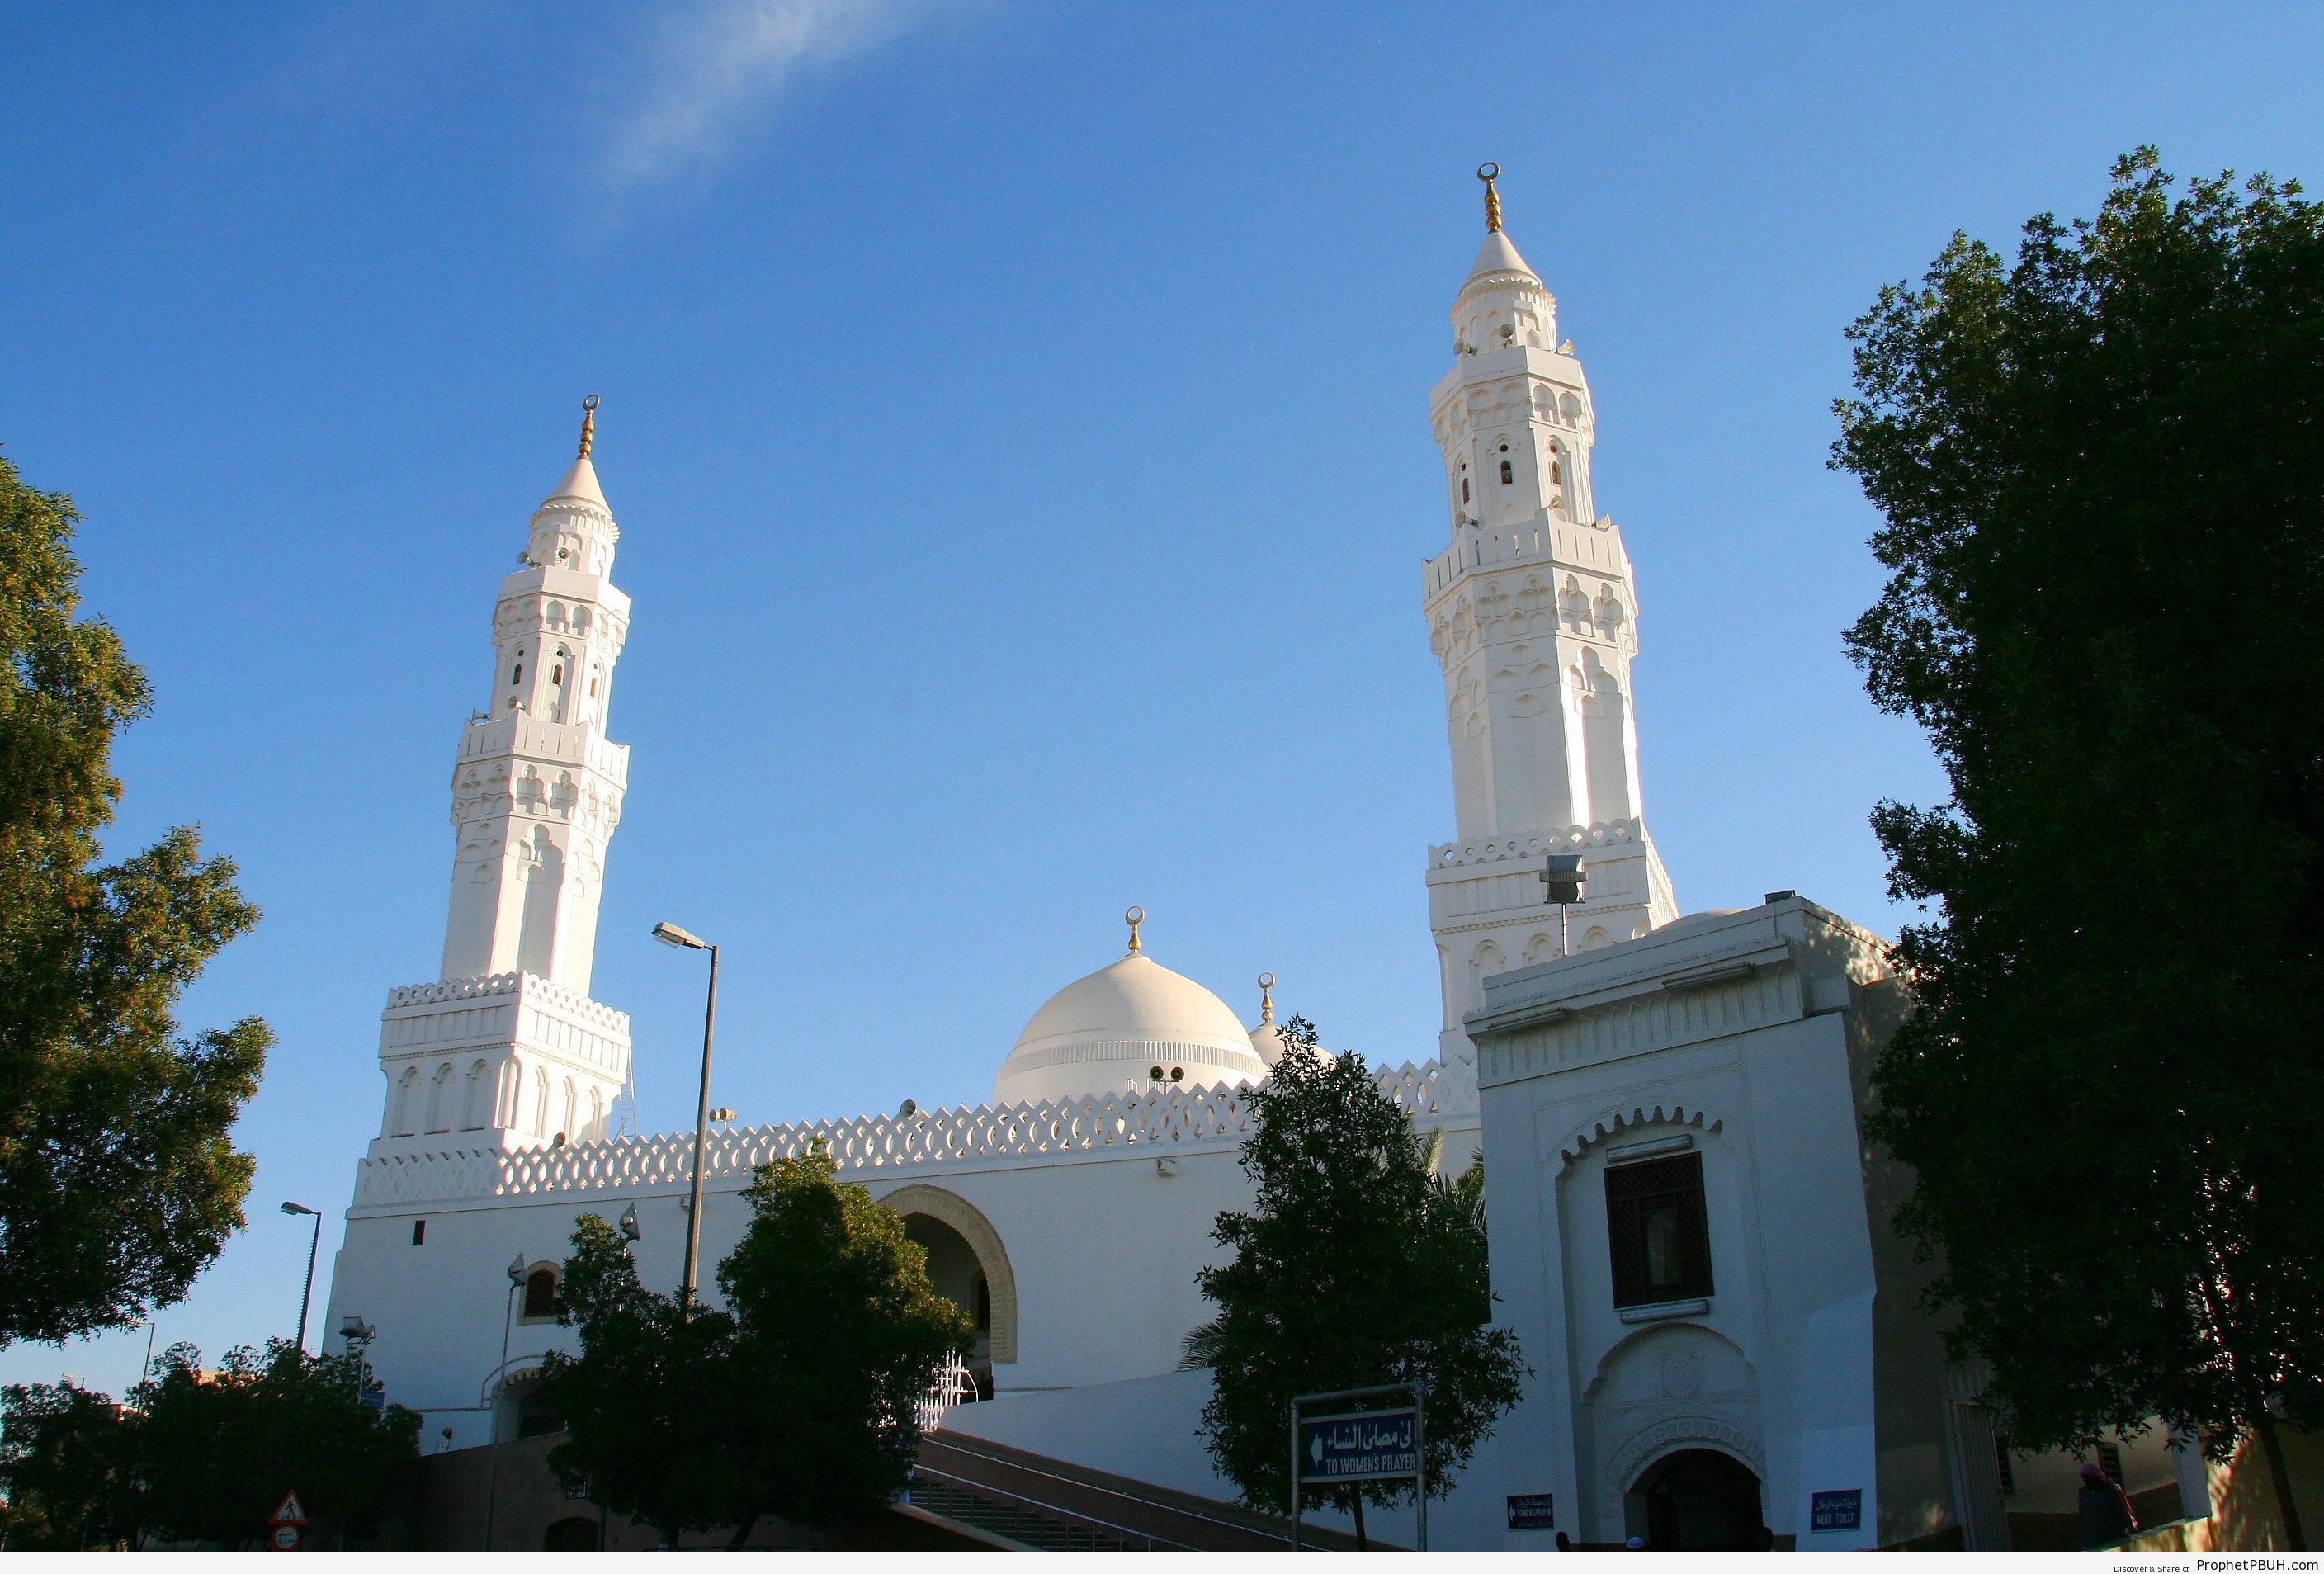 Quba Mosque (Islam-s First Mosque) in Madinah, Saudi Arabia - Islamic Architecture -Picture